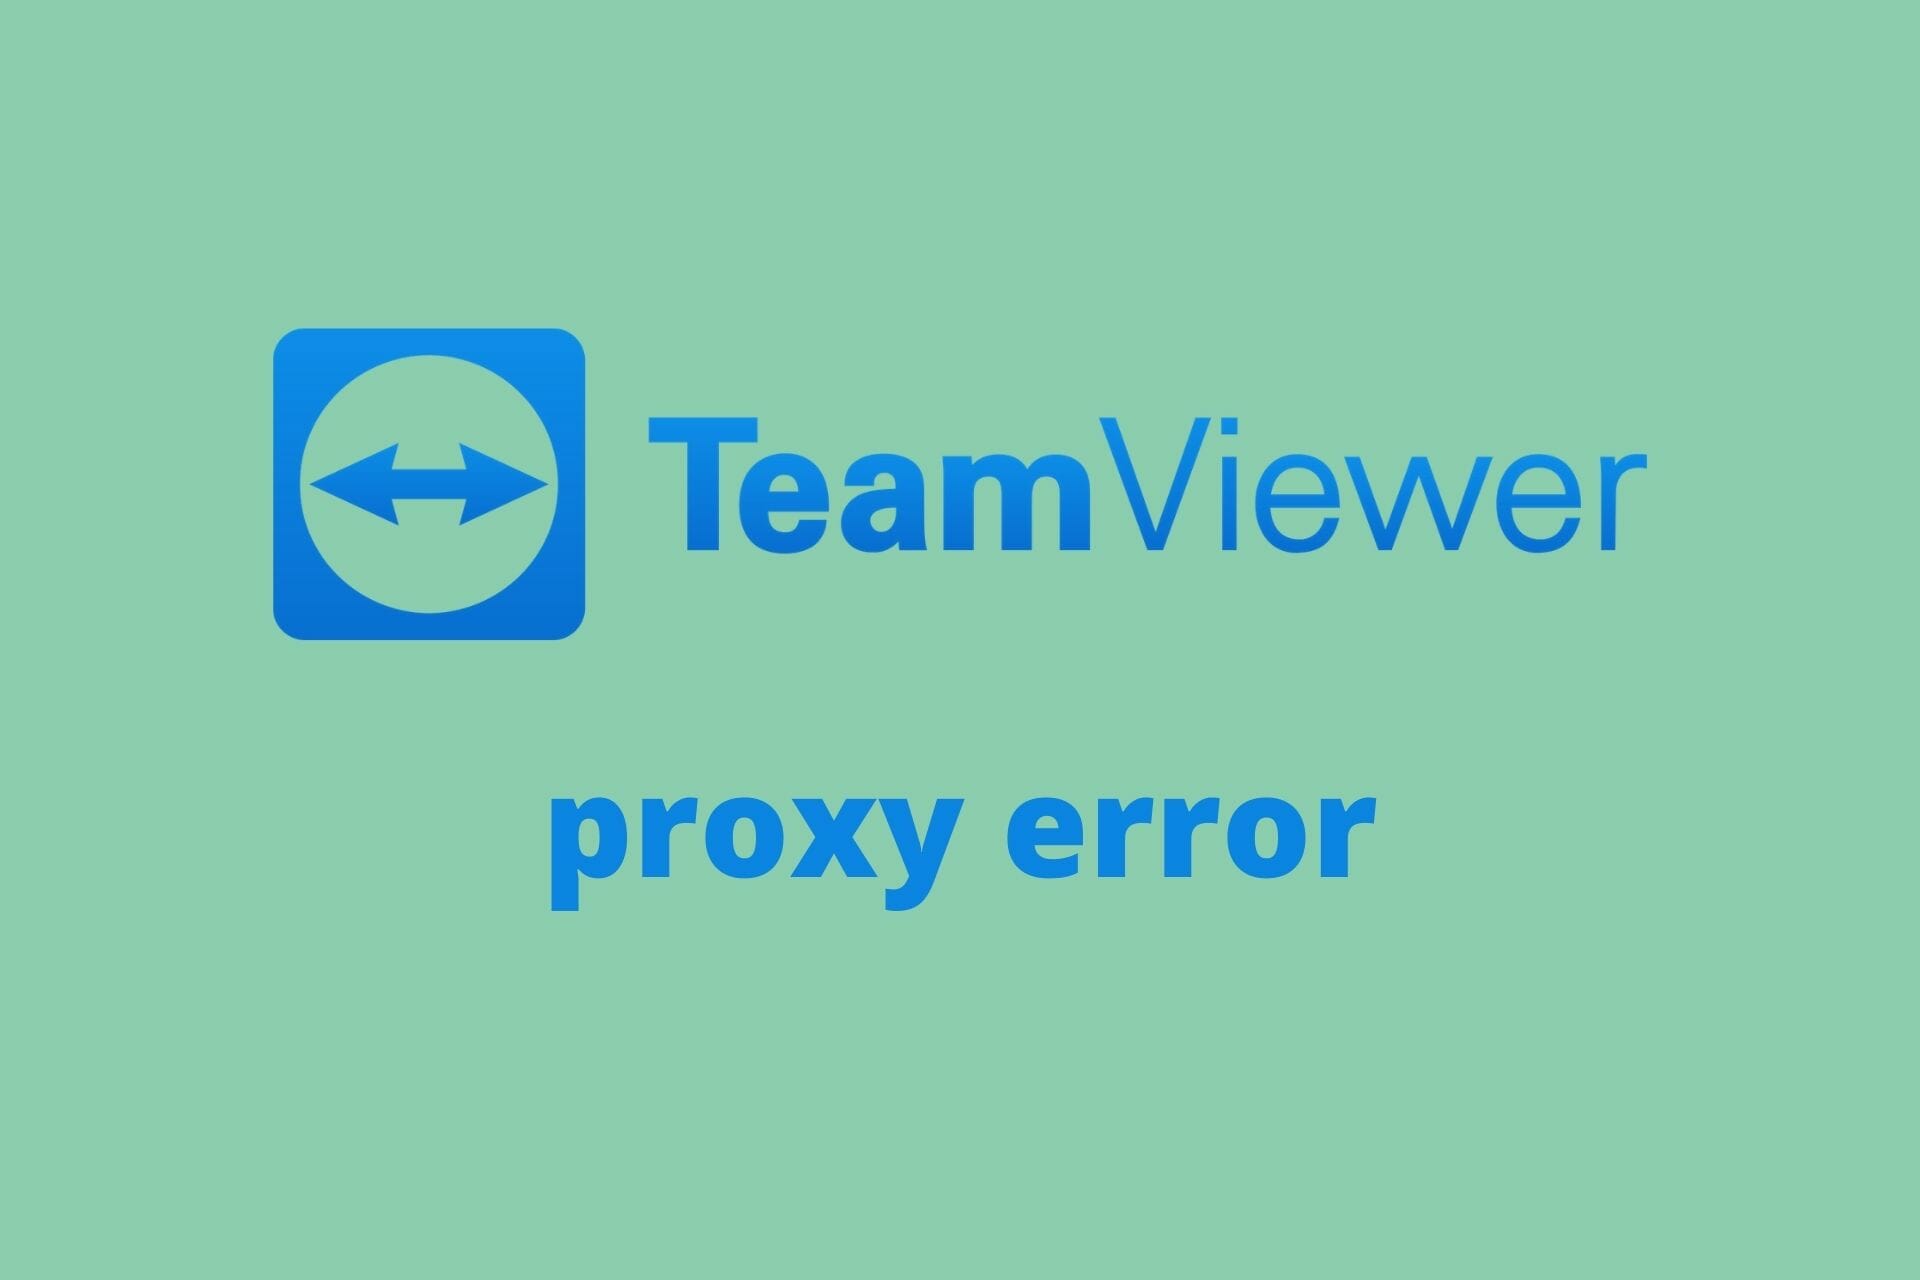 How to fix TeamViewer proxy error